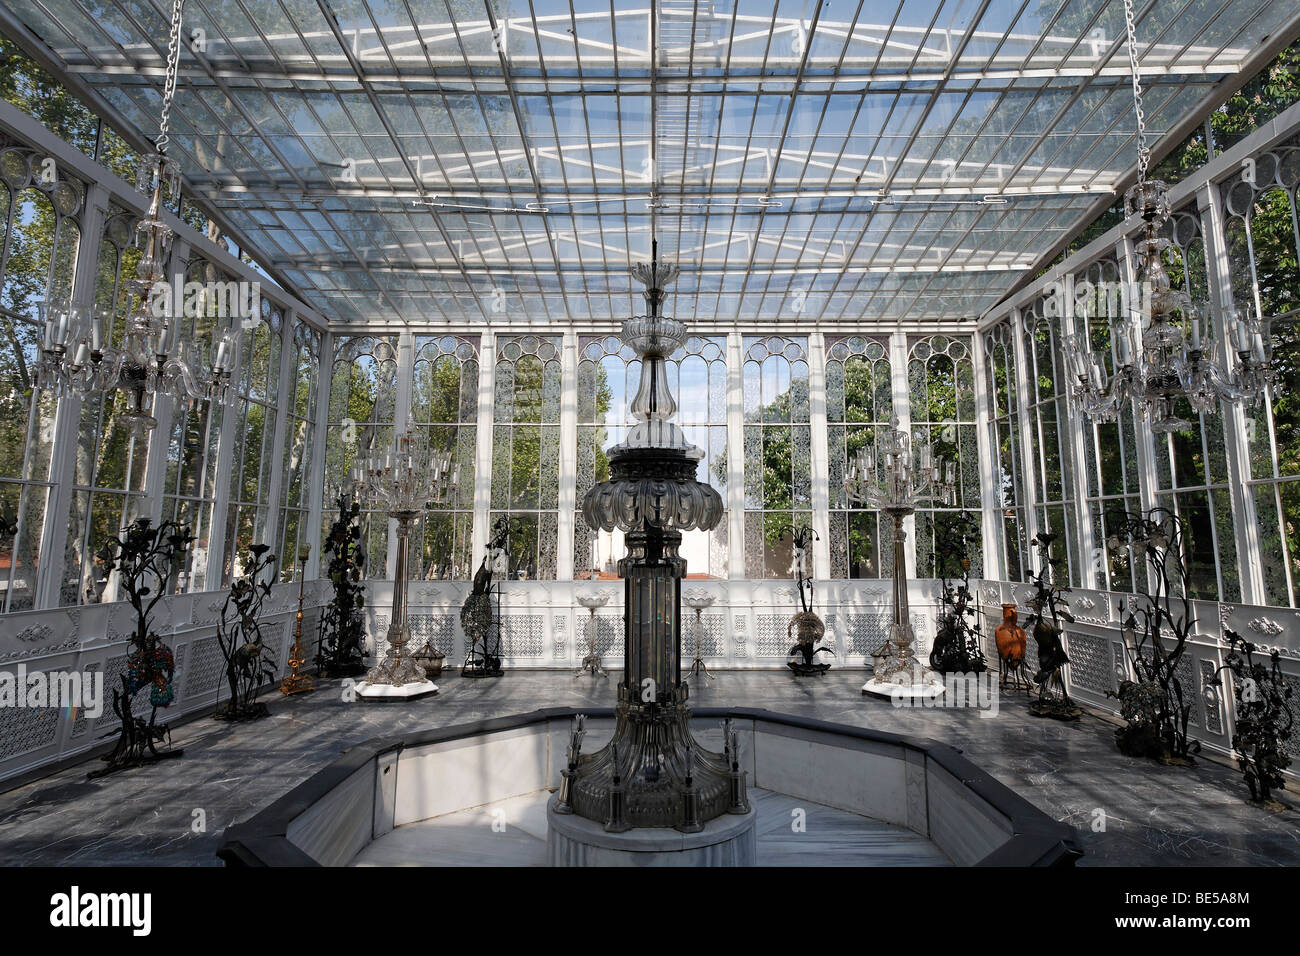 Kristall Palast Aus Dem 19 Jahrhundert Dolmabahce Palast Besiktas Istanbul Turkei Stockfotografie Alamy